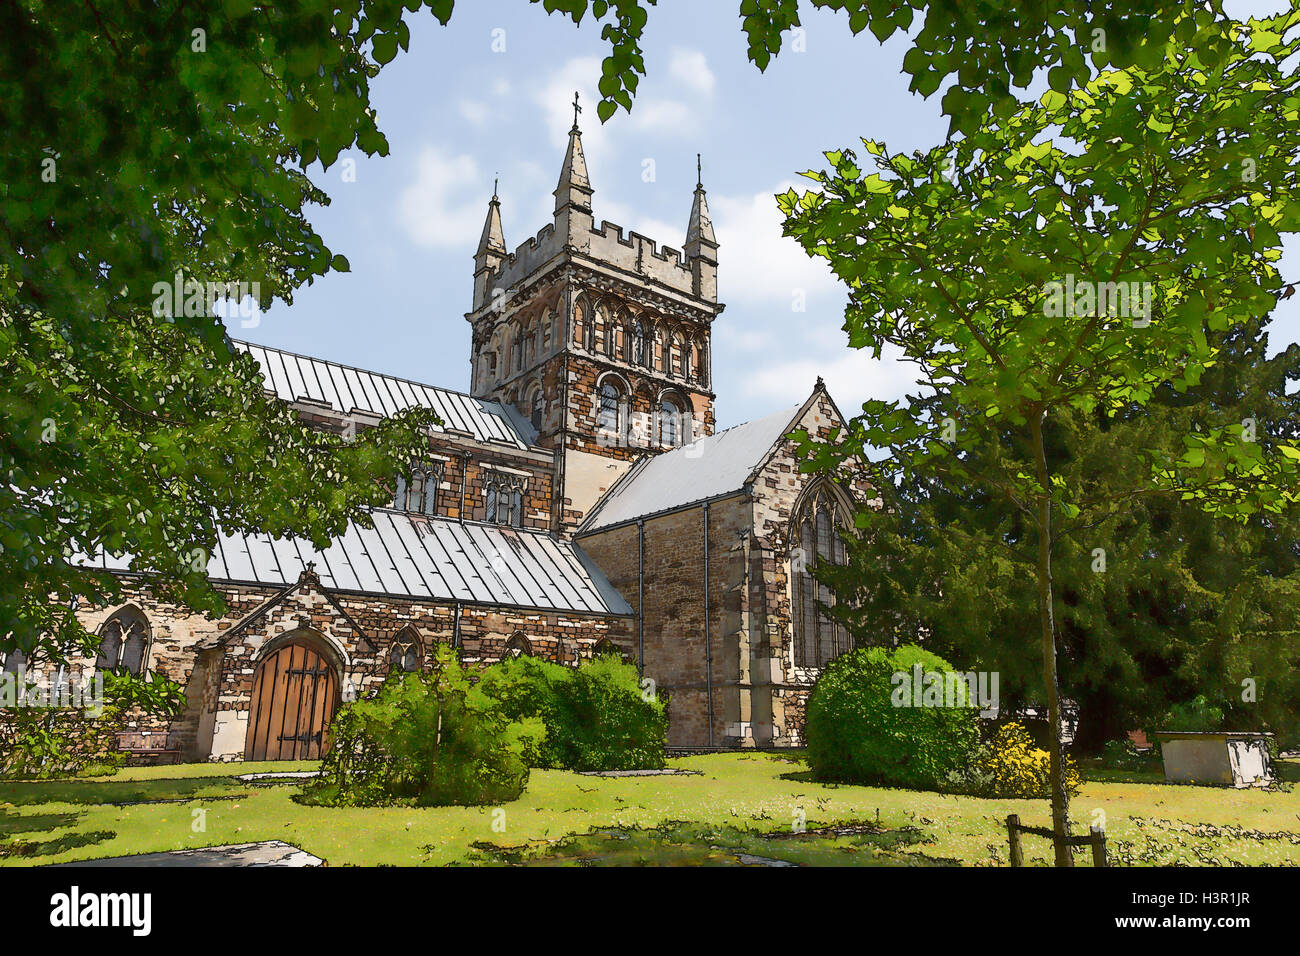 Wimborne Minster church Dorset England Uk illustration like cartoon effect Stock Photo